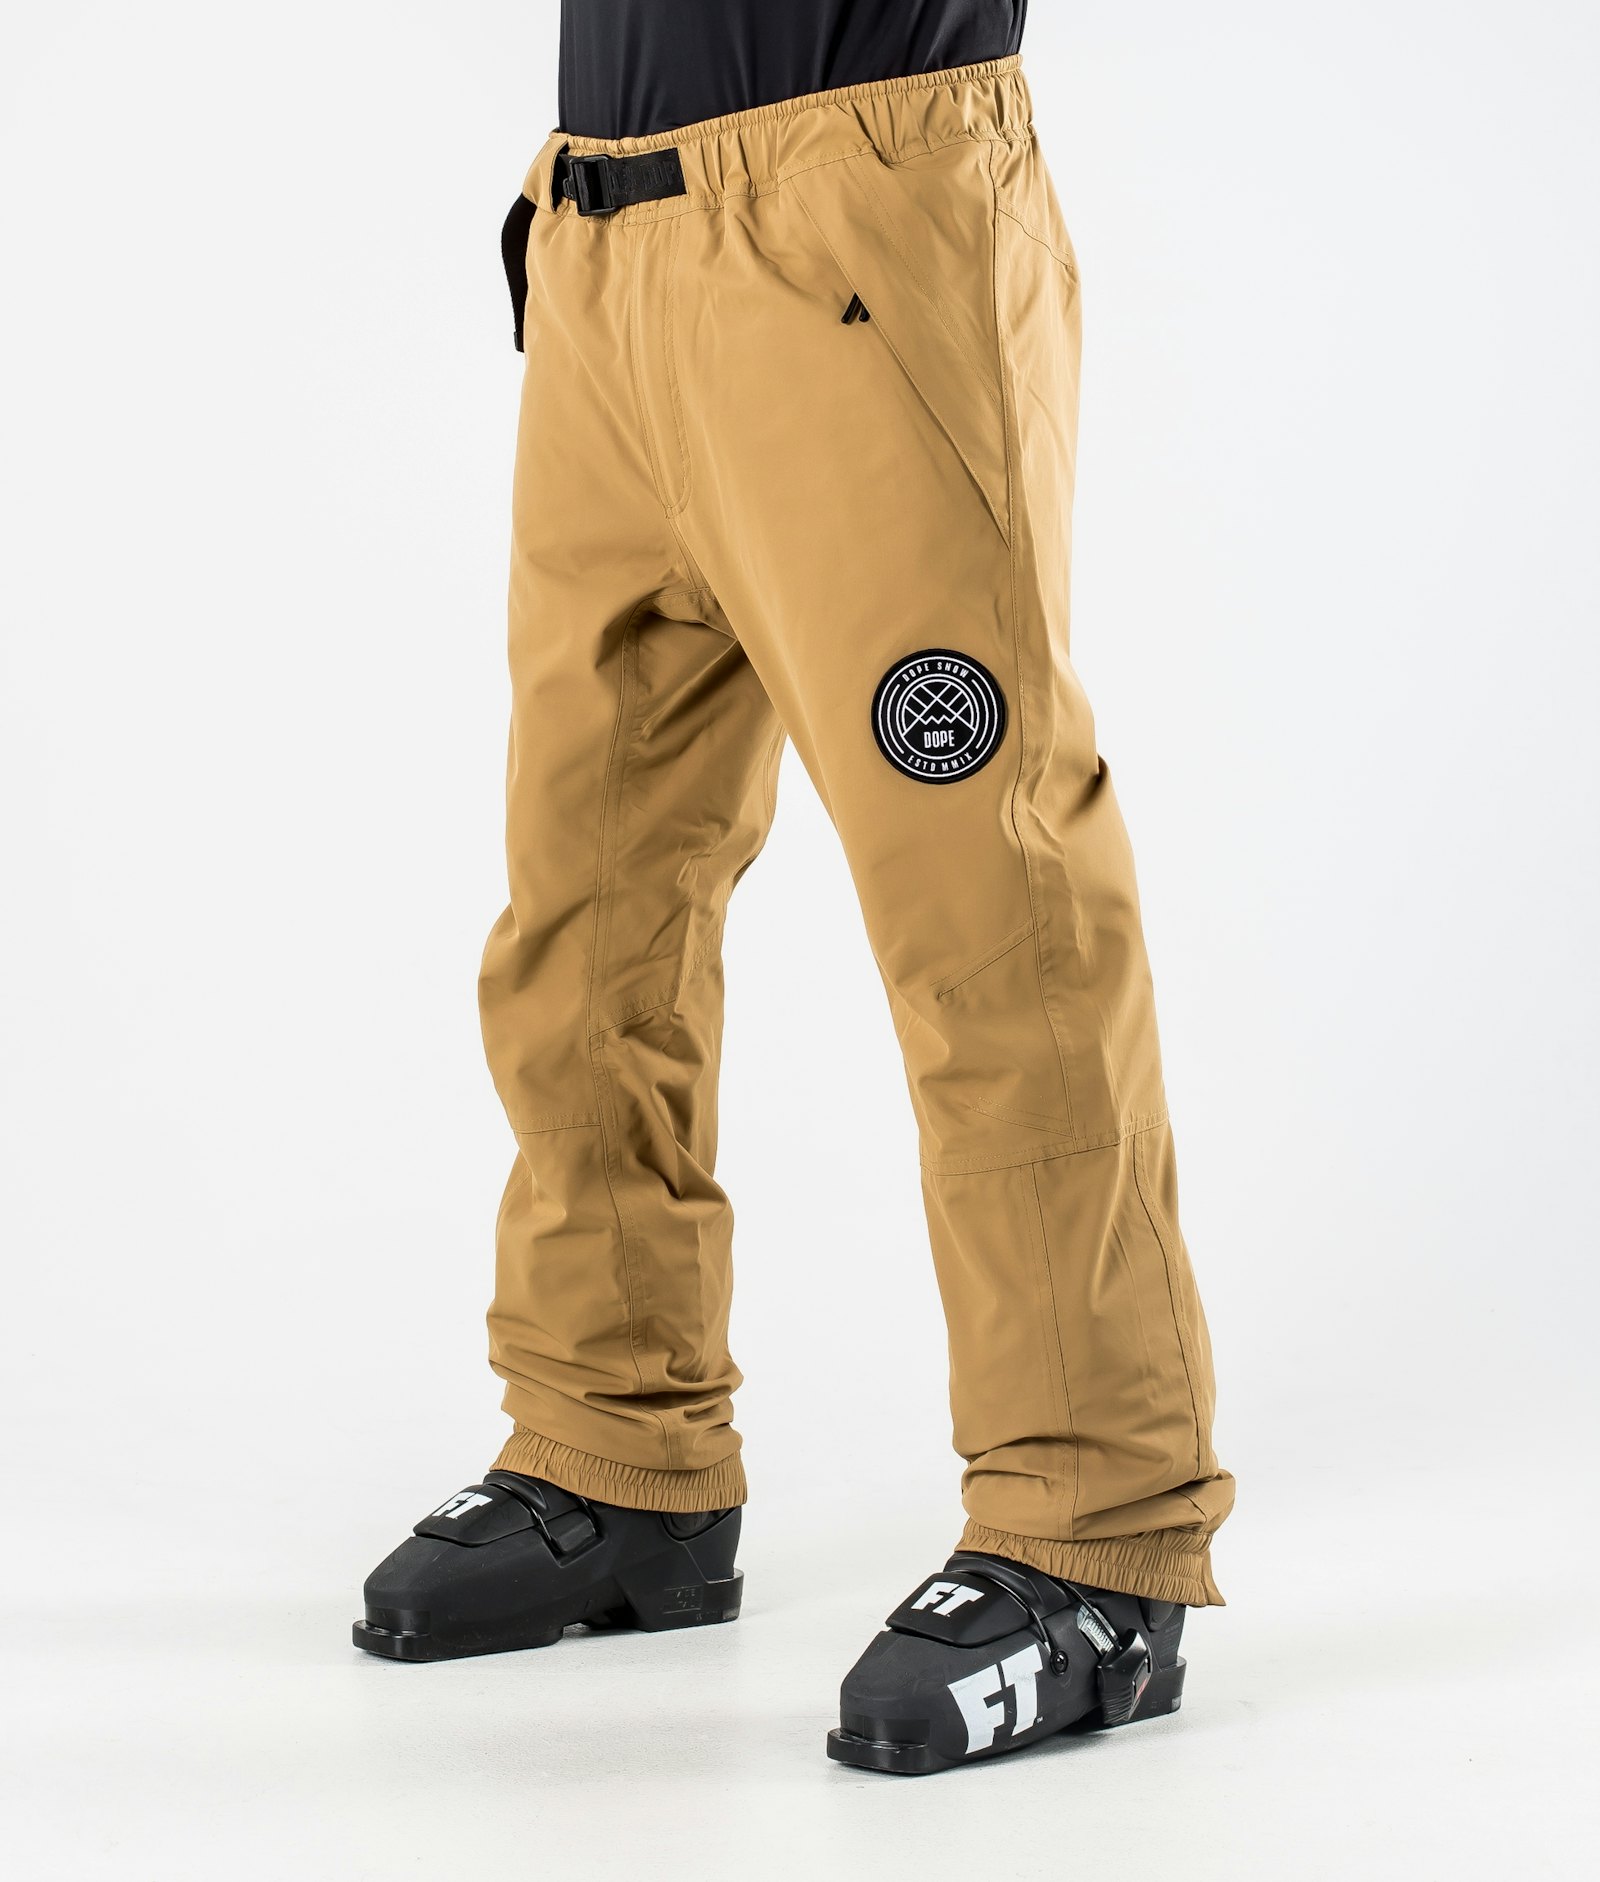 Blizzard 2020 Pantalon de Ski Homme Gold